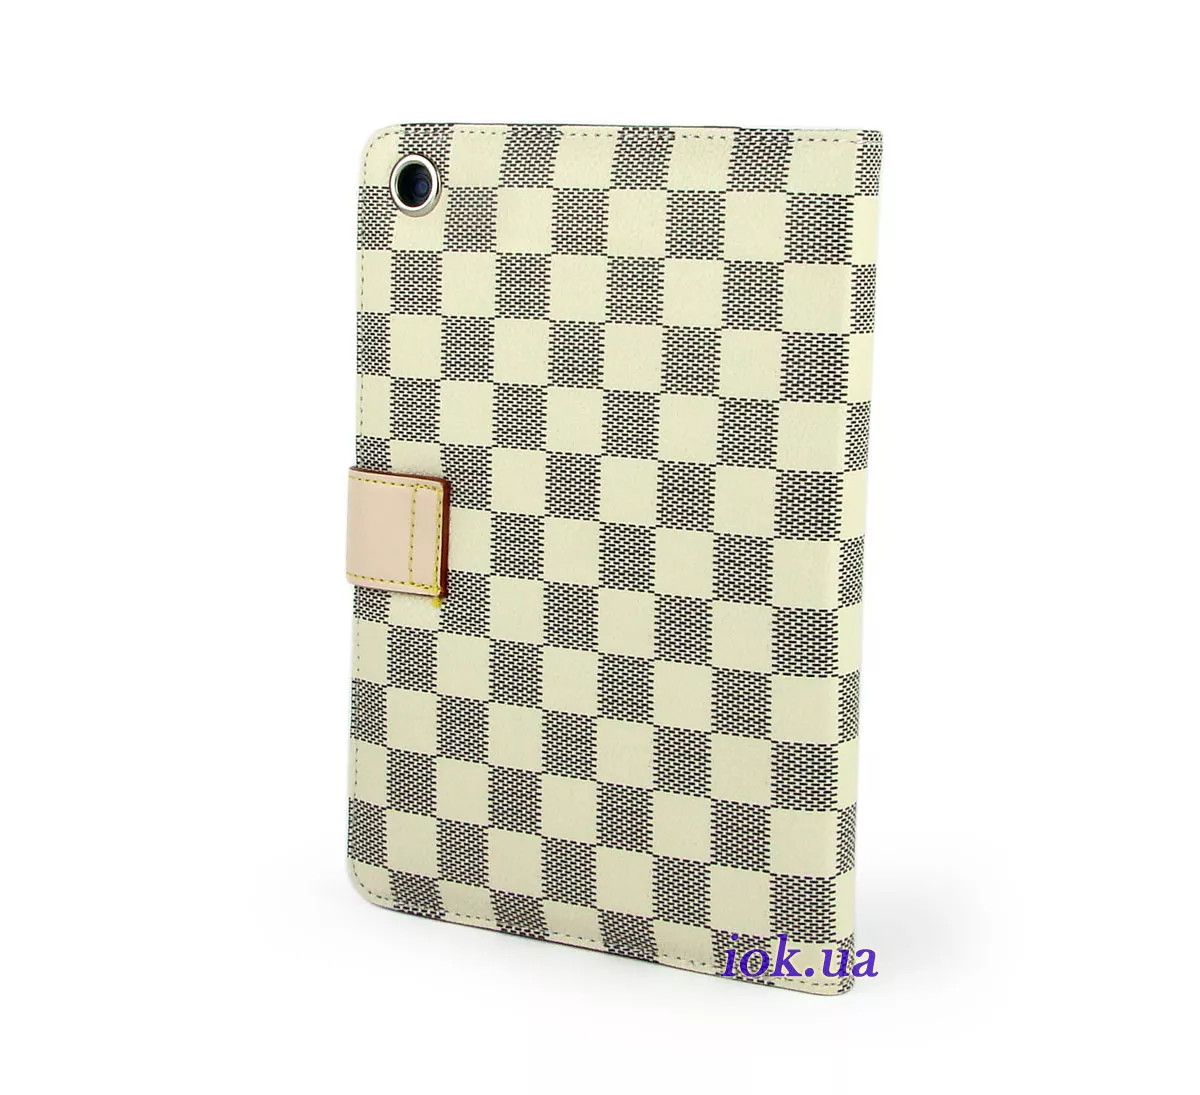 Чехол-книжка Louis Vuitton для планшетов iPad Mini / iPad Mini 2, белый